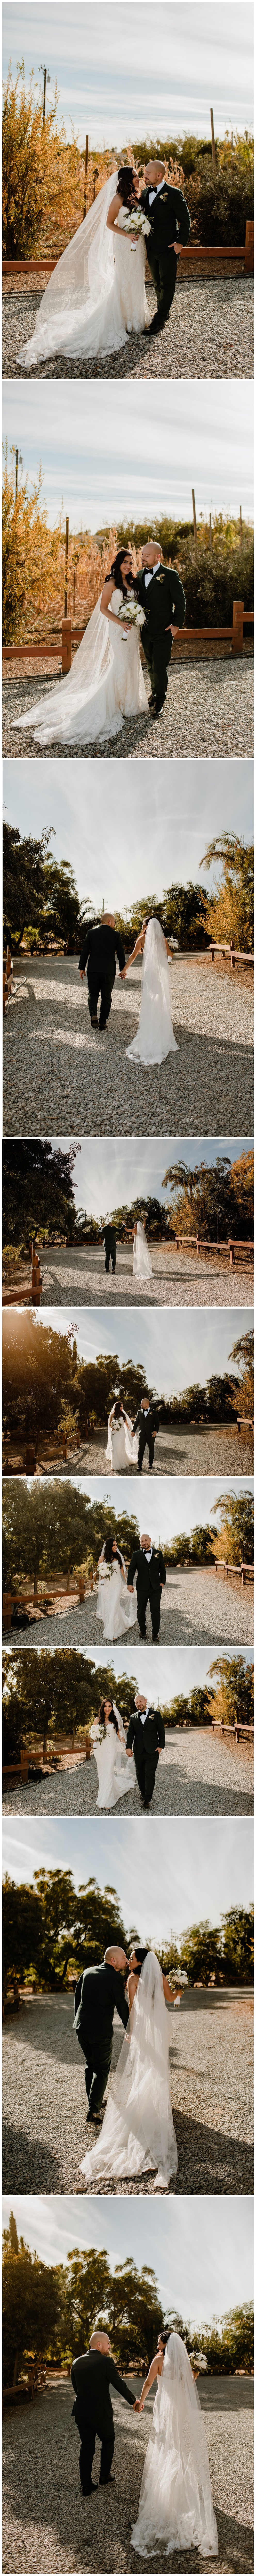 Erika and Tony - Lake Perris, CA Rustic Wedding - Eve Rox Photography-323_WEB.jpg